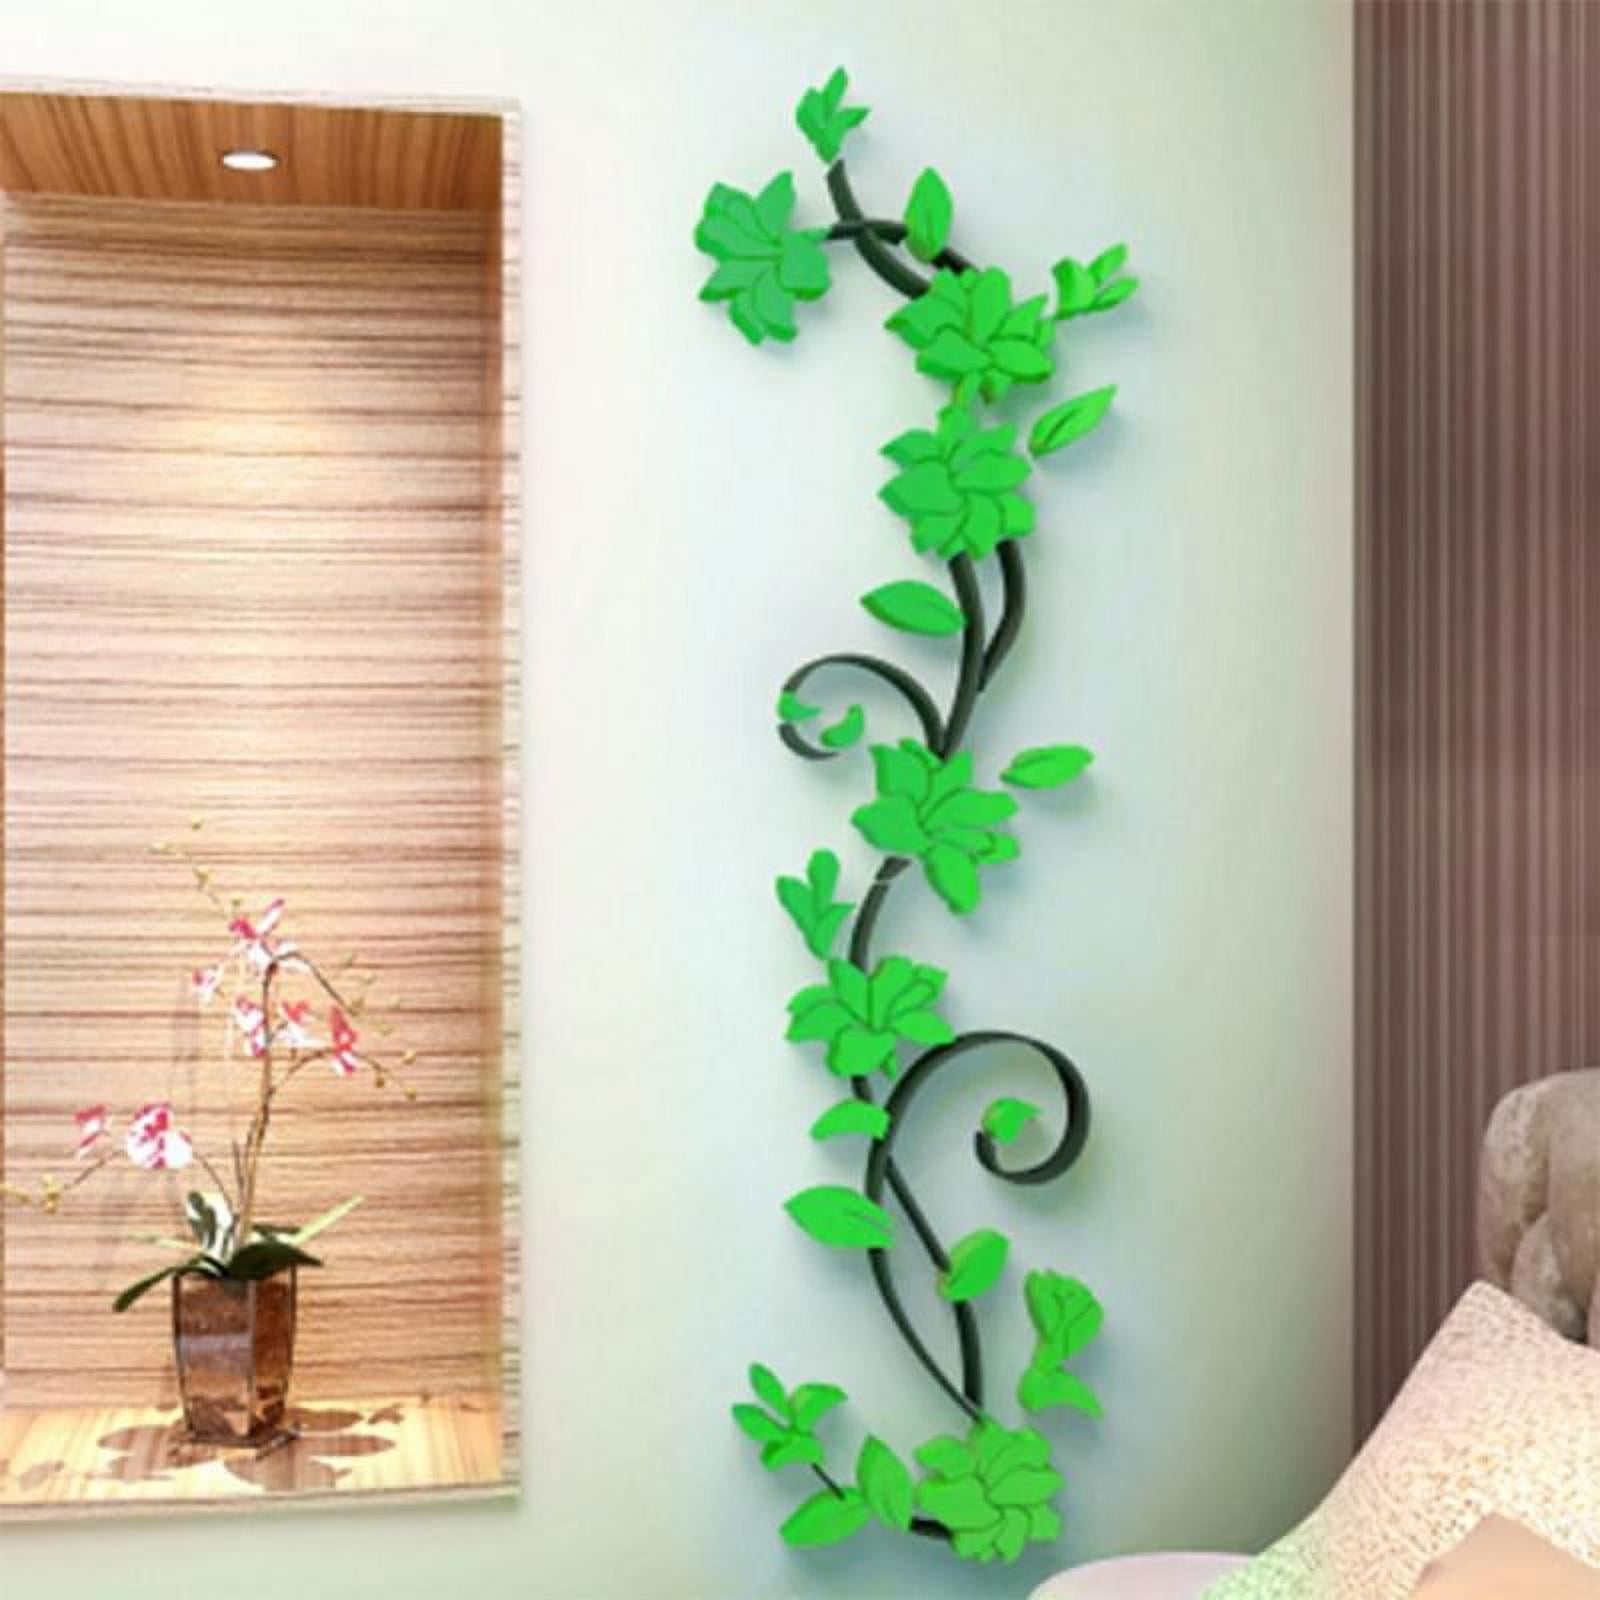 US 3D Mirror Flower Sticker Art Design Decal Wall Decals Home Decor Removable 